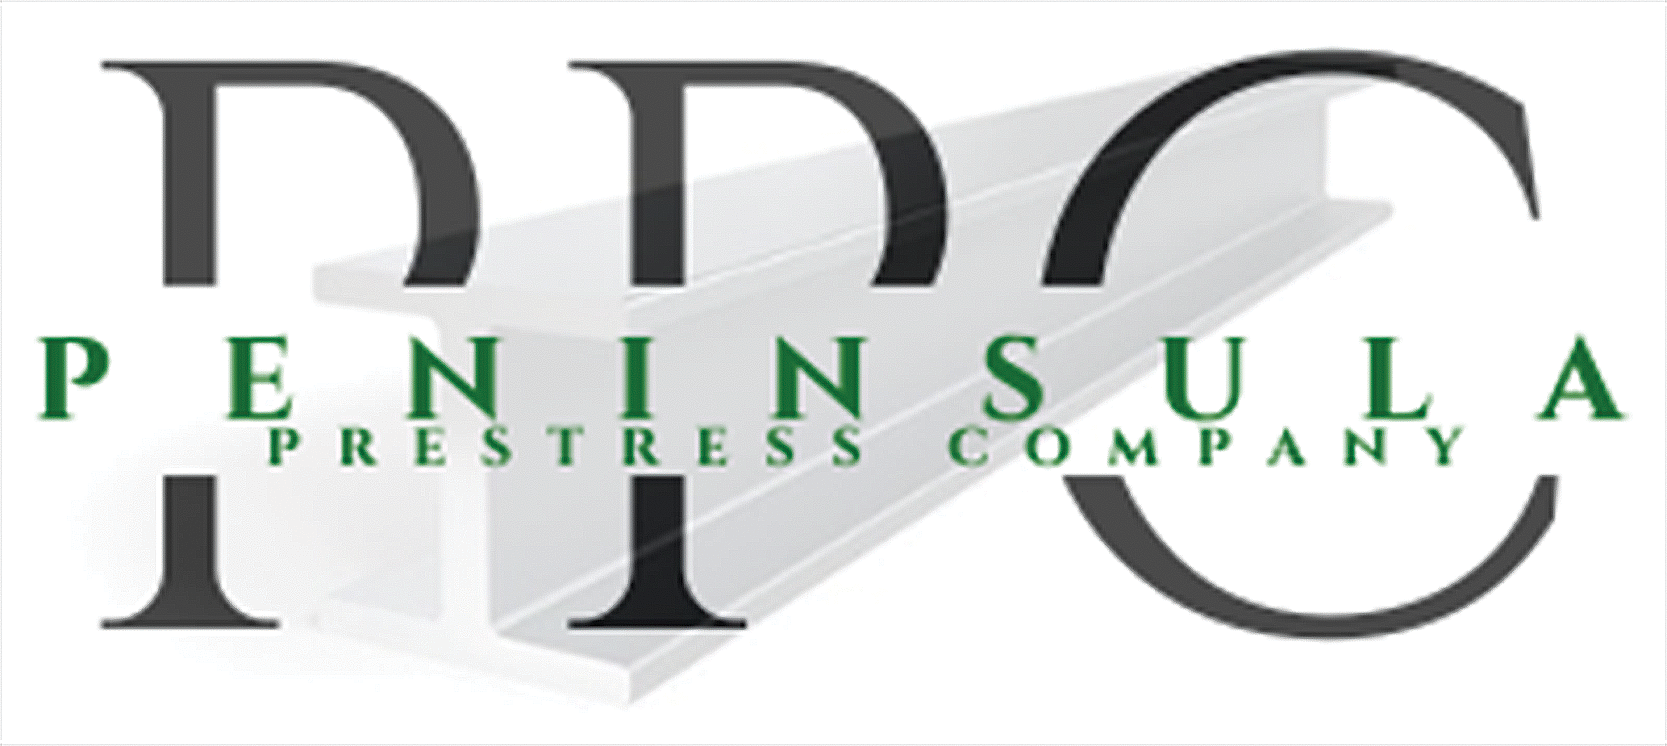 Peninsula Prestress Company